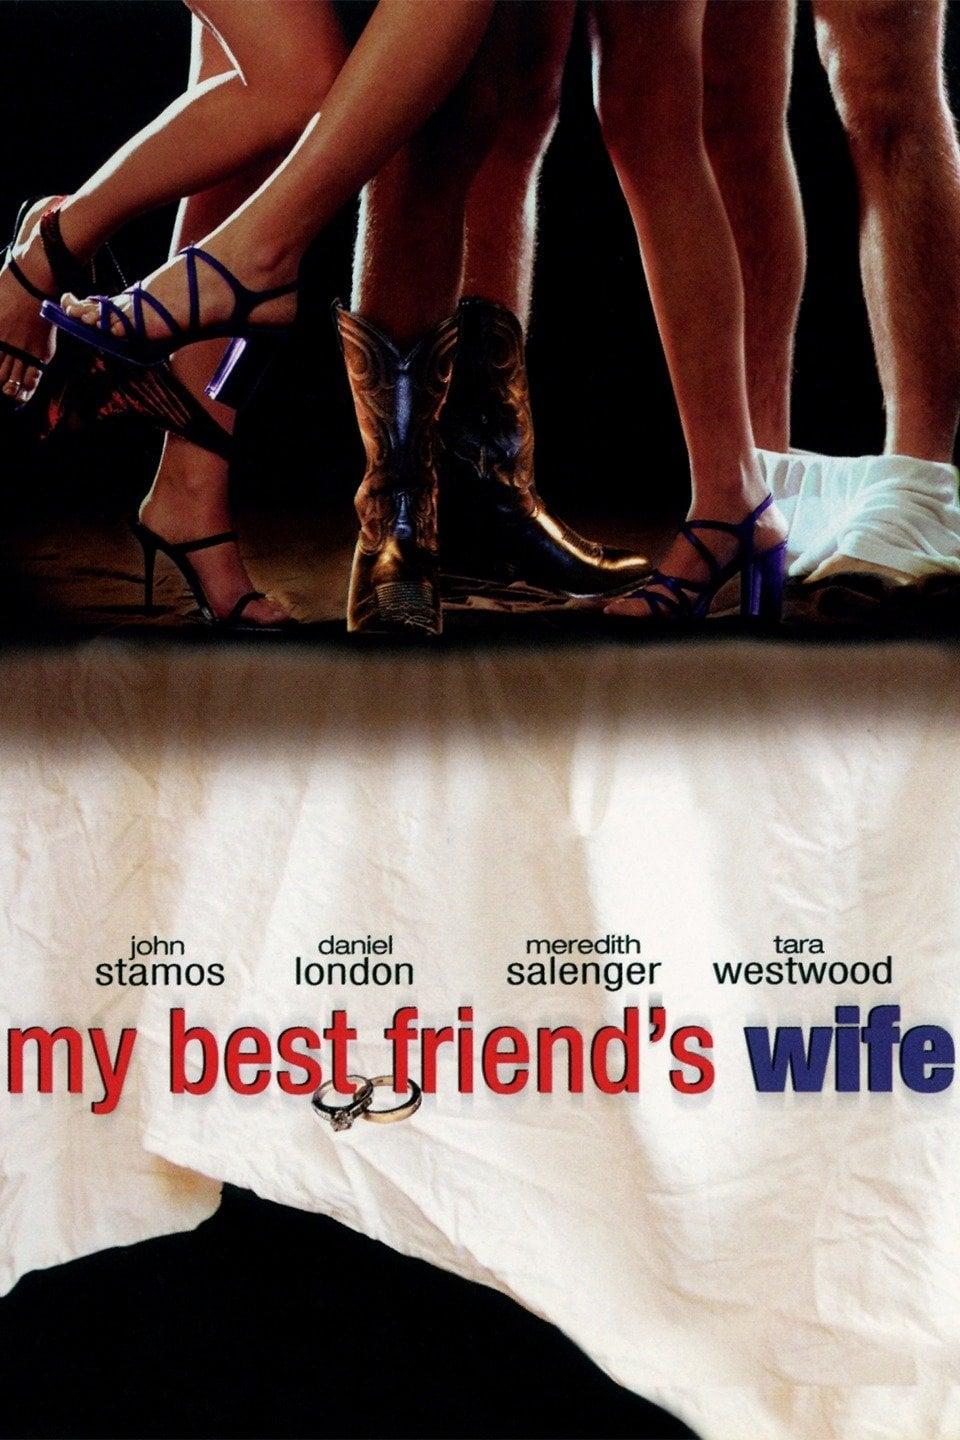 My Best Friend's Wife poster